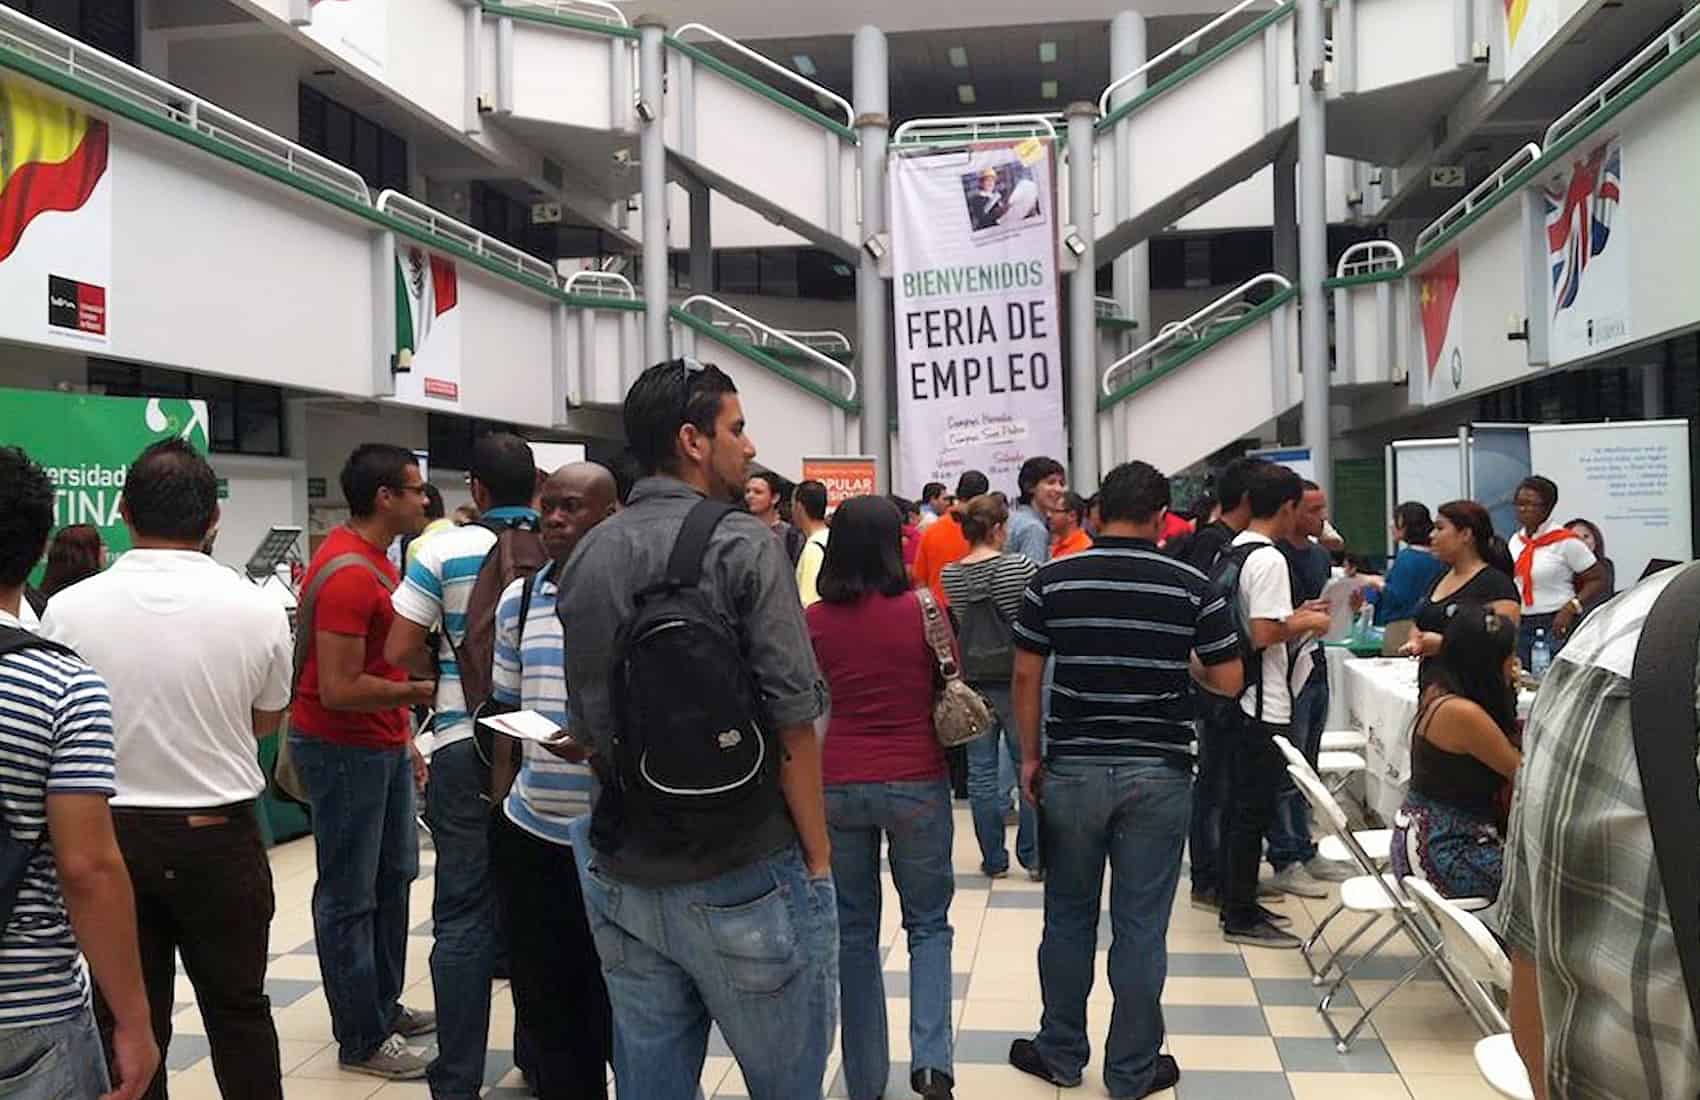 Job fair at Universidad Latina de Costa Rica